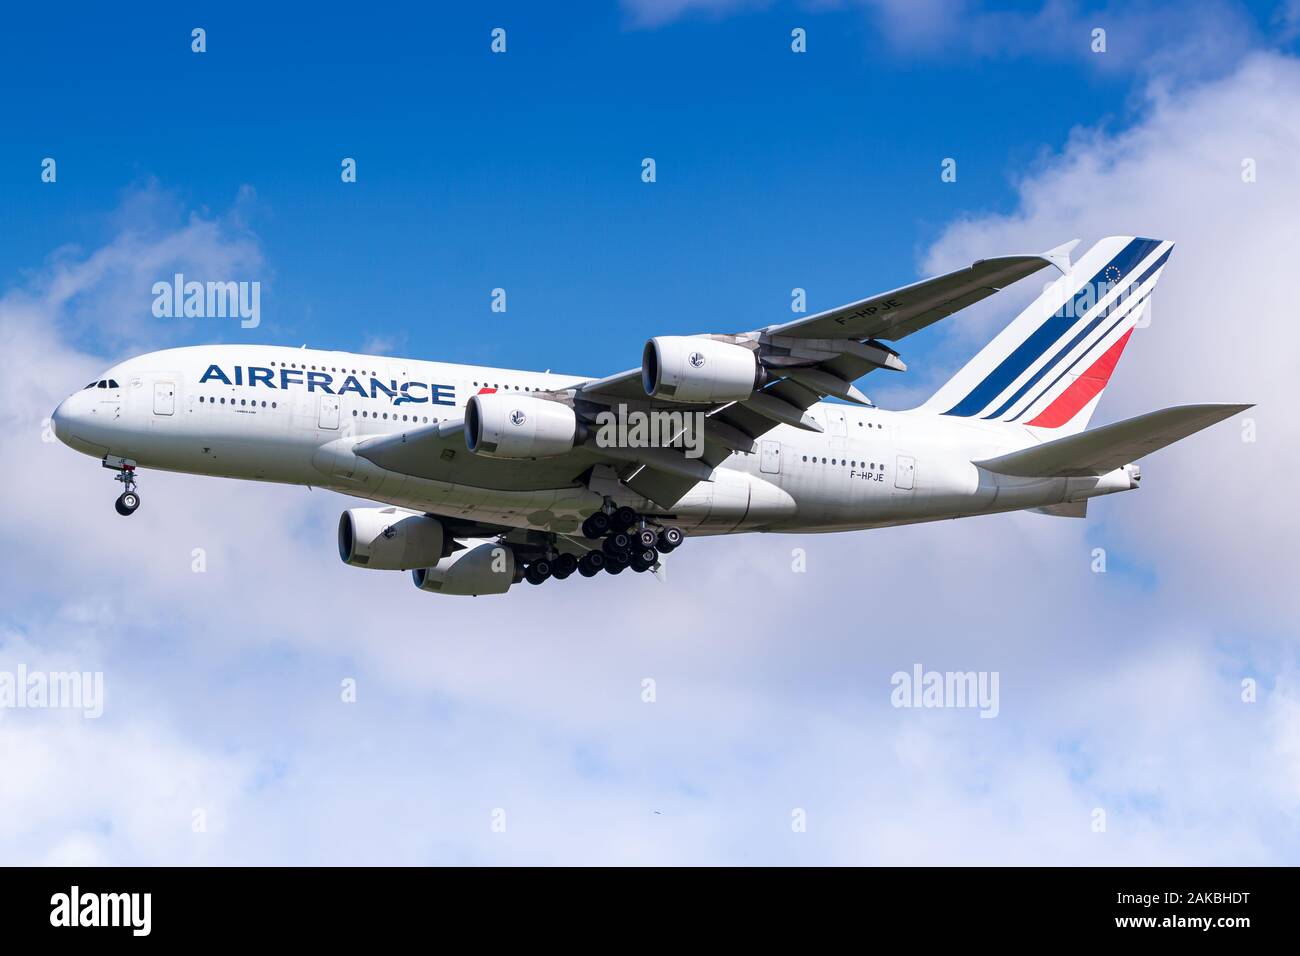 Paris, Frankreich, 17. August 2018: Air France Airbus A380 Flugzeug am Flughafen Paris Charles de Gaulle (CDG) in Frankreich. Airbus ist ein Flugzeug herstellen Stockfoto